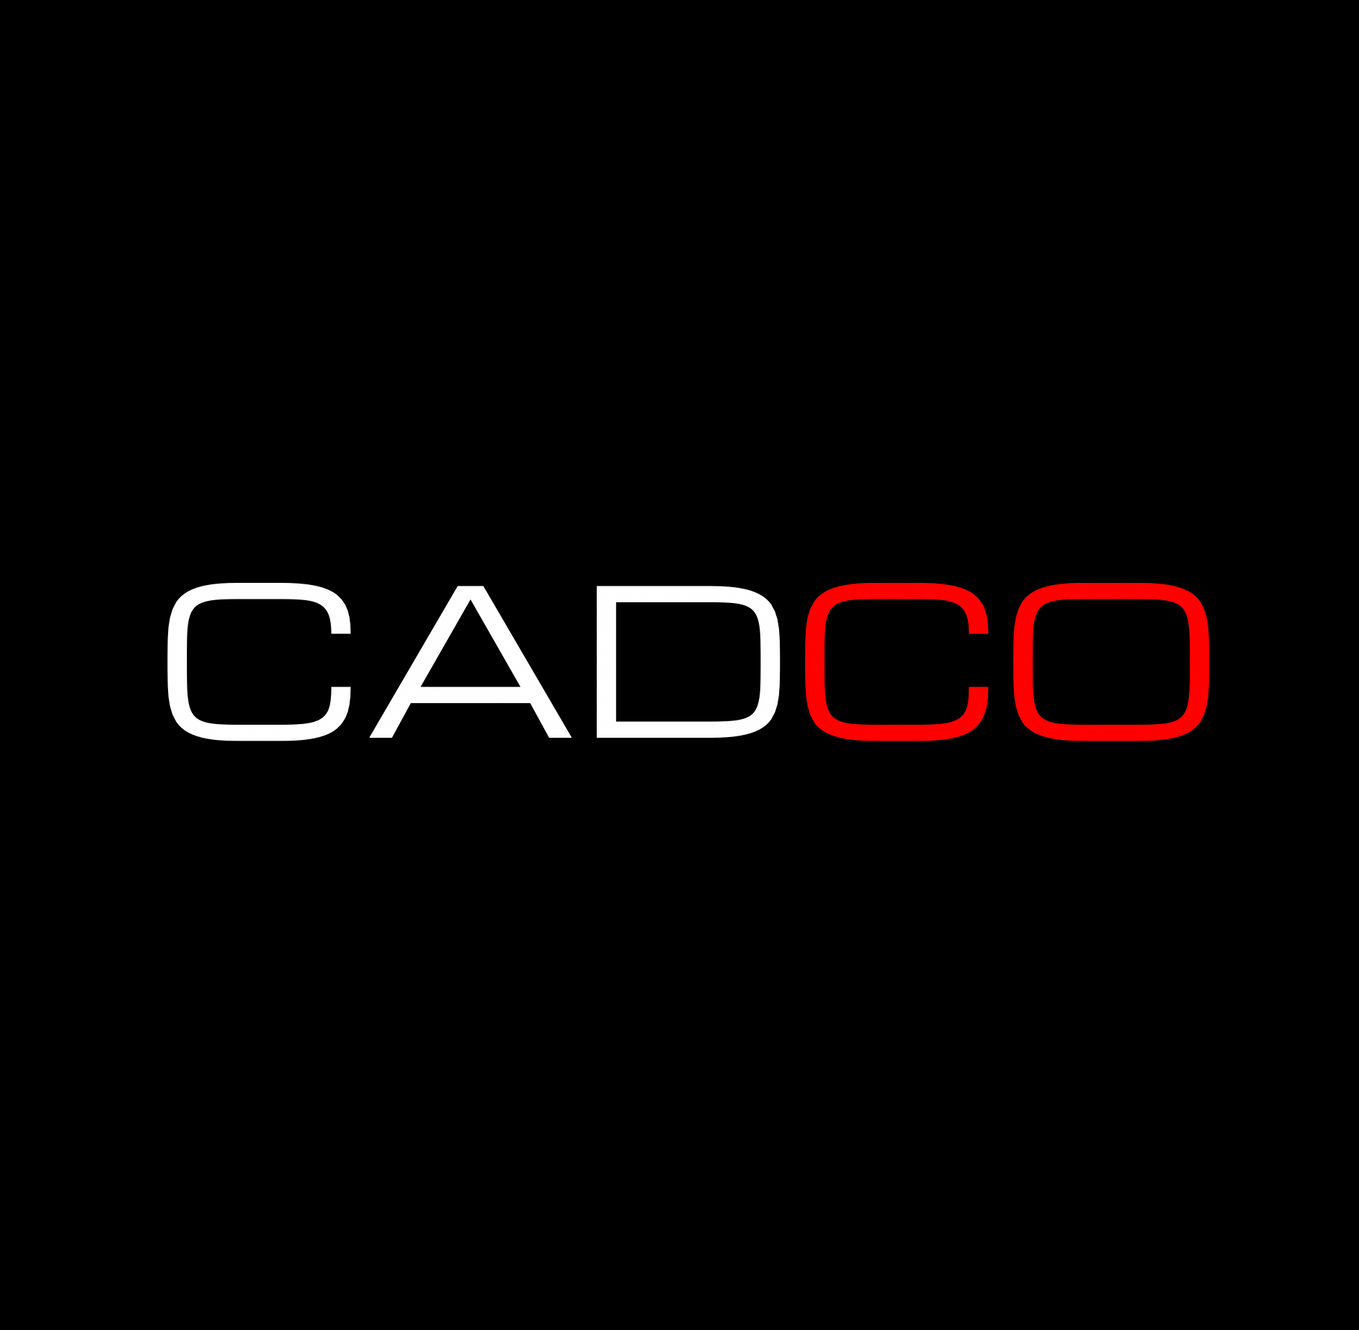 www.cadco.co.uk